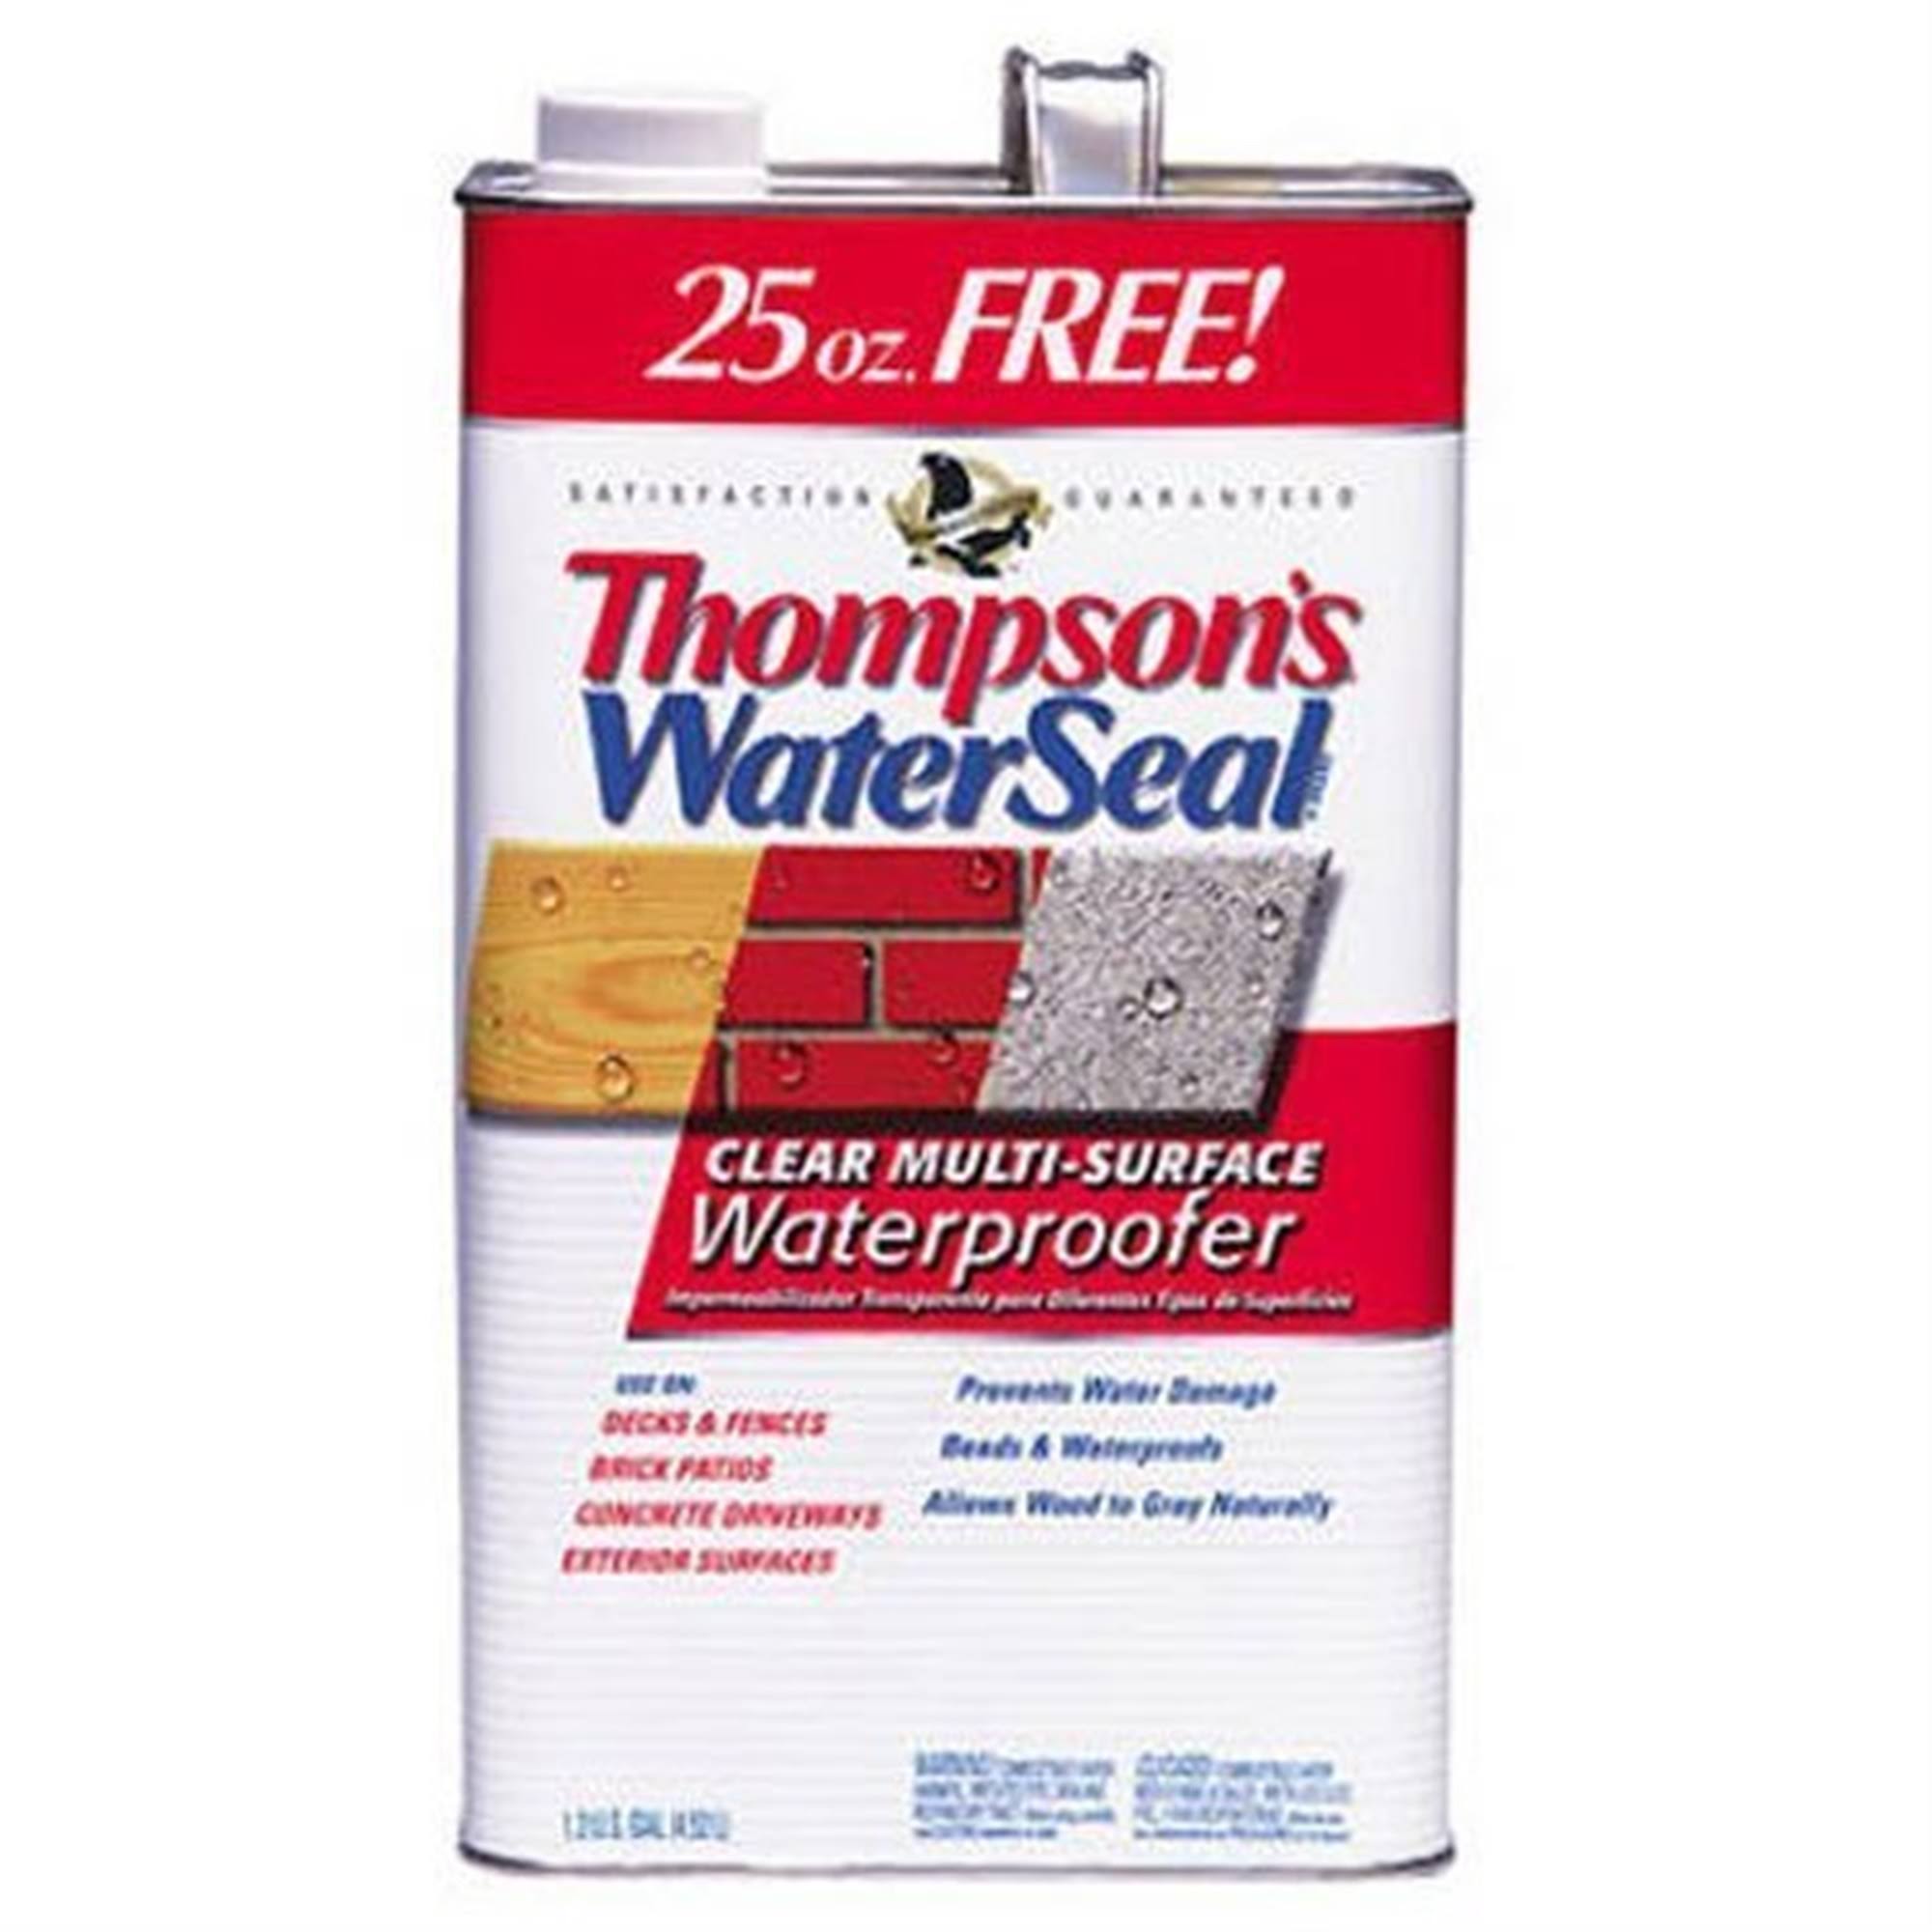 Thompson's WaterSeal Multi-Surface Waterproofer - Clear, 1.2 gal